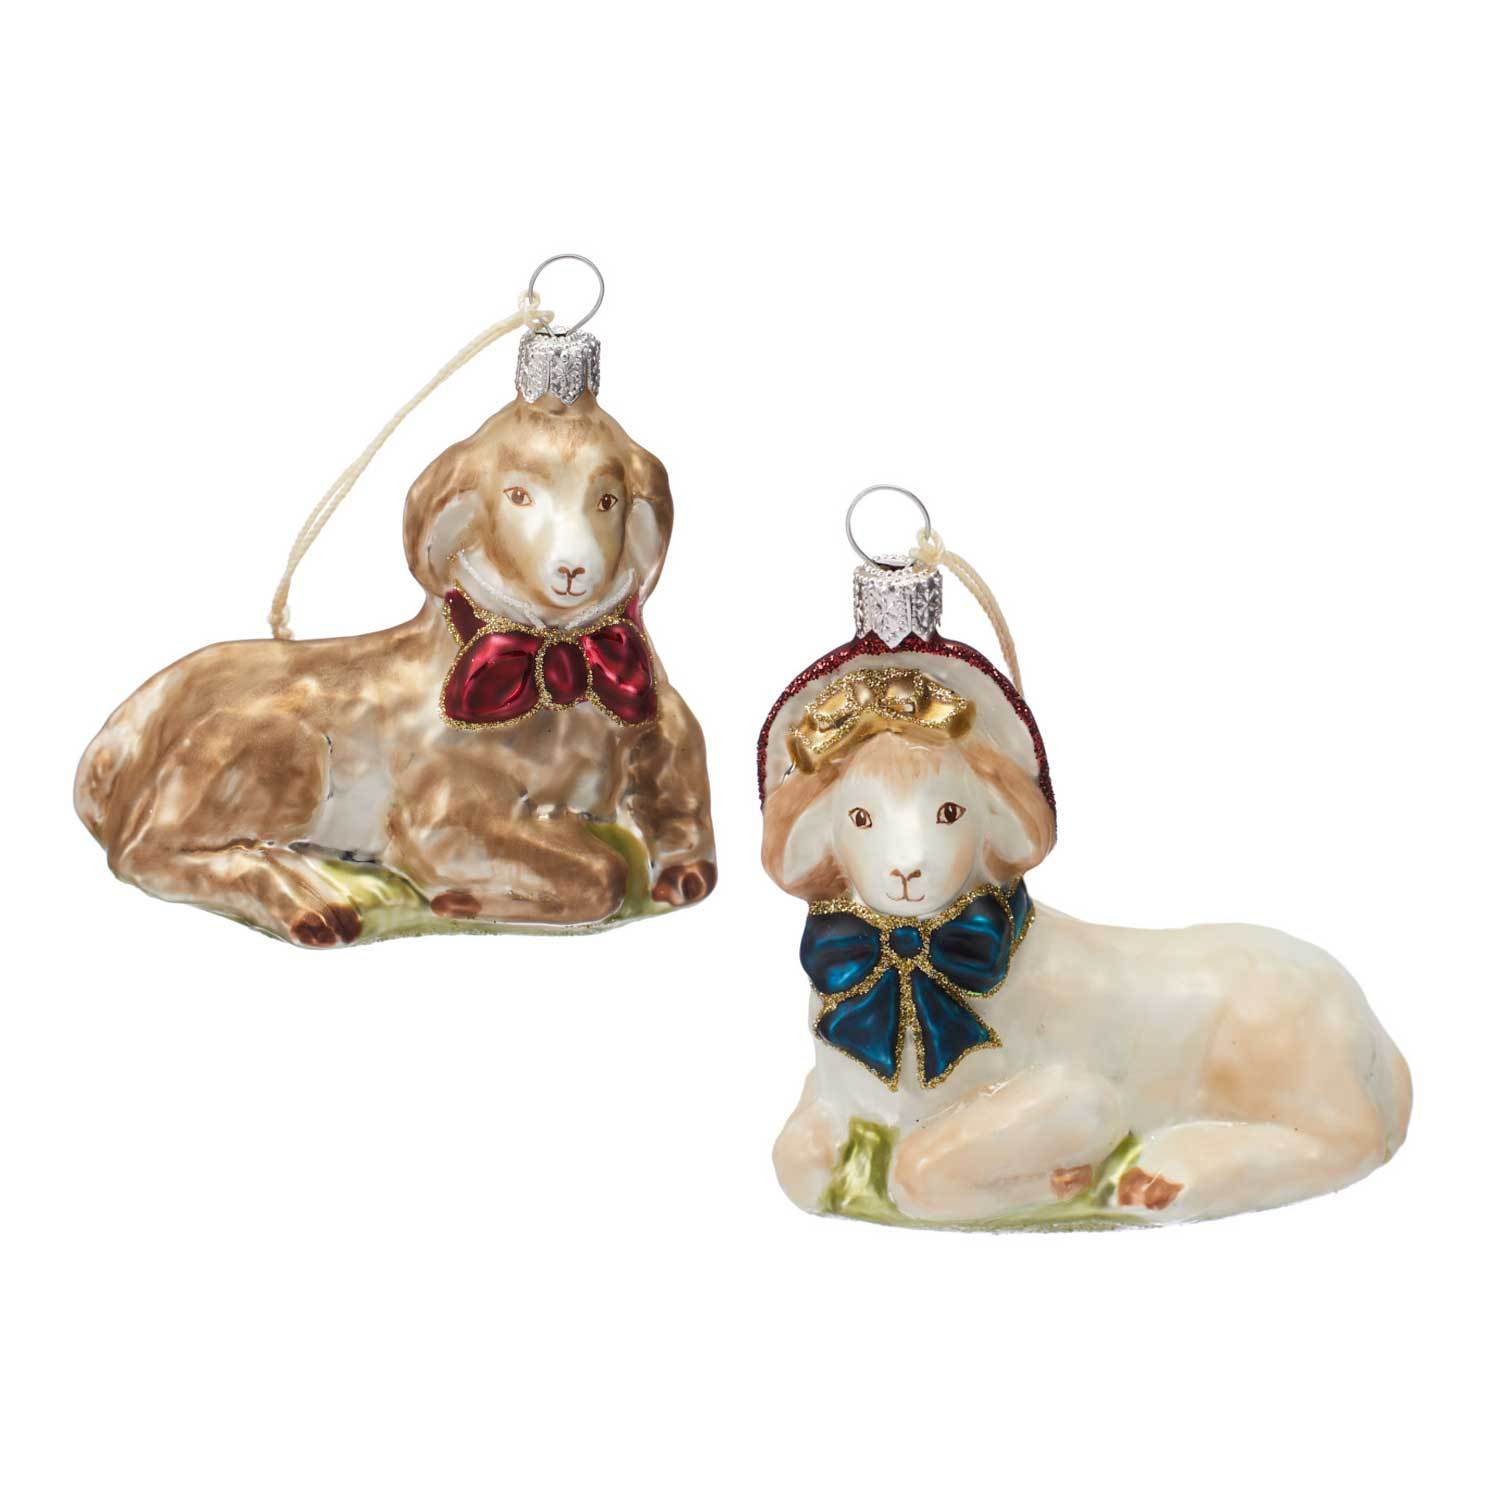 Beekman 1802 Limited Edition Goat Ornament - Christmas Kids